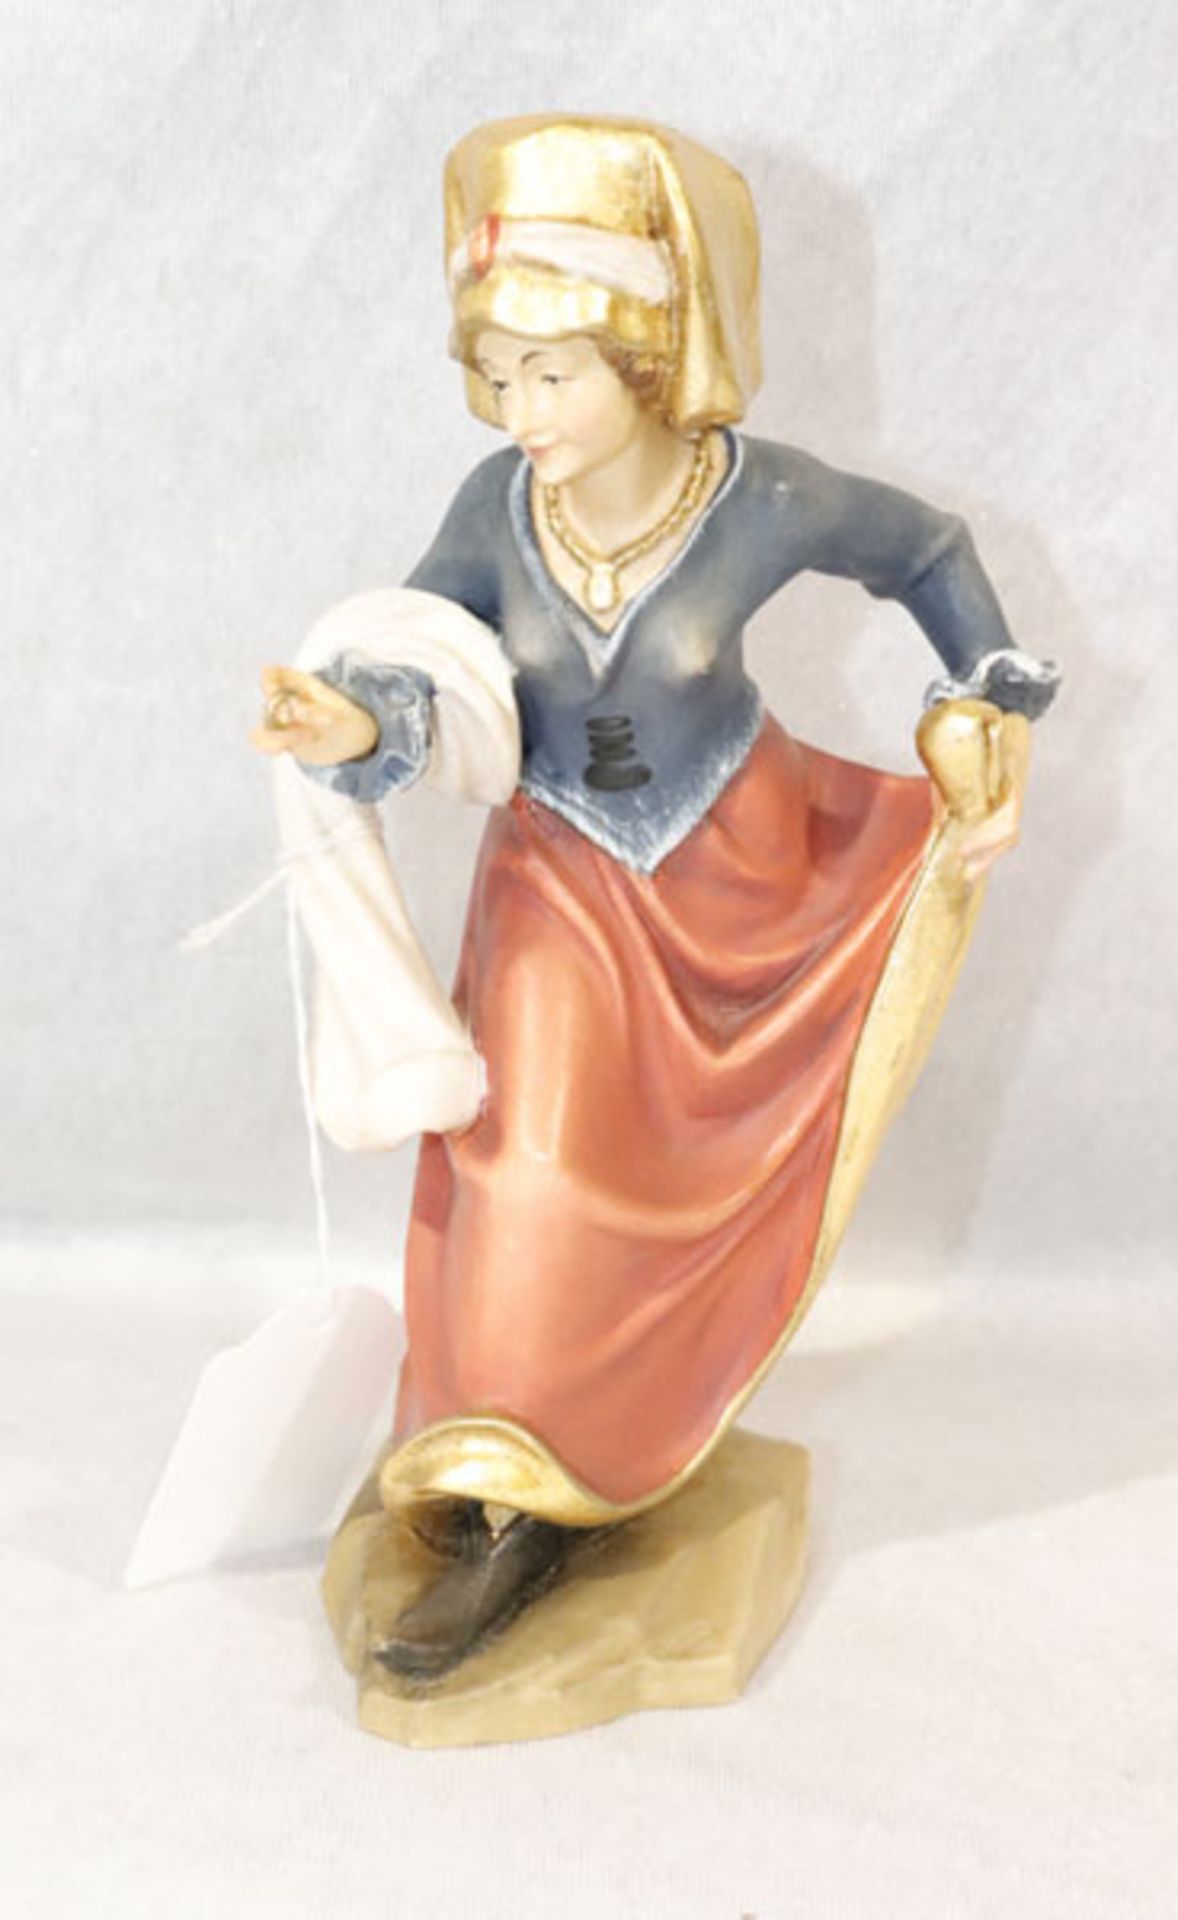 Holz Figurenskulptur 'Burgfräulein', farbig gefaßt, Holzbildhauerei Kreutz, Gröbenzell, H 18,5 cm